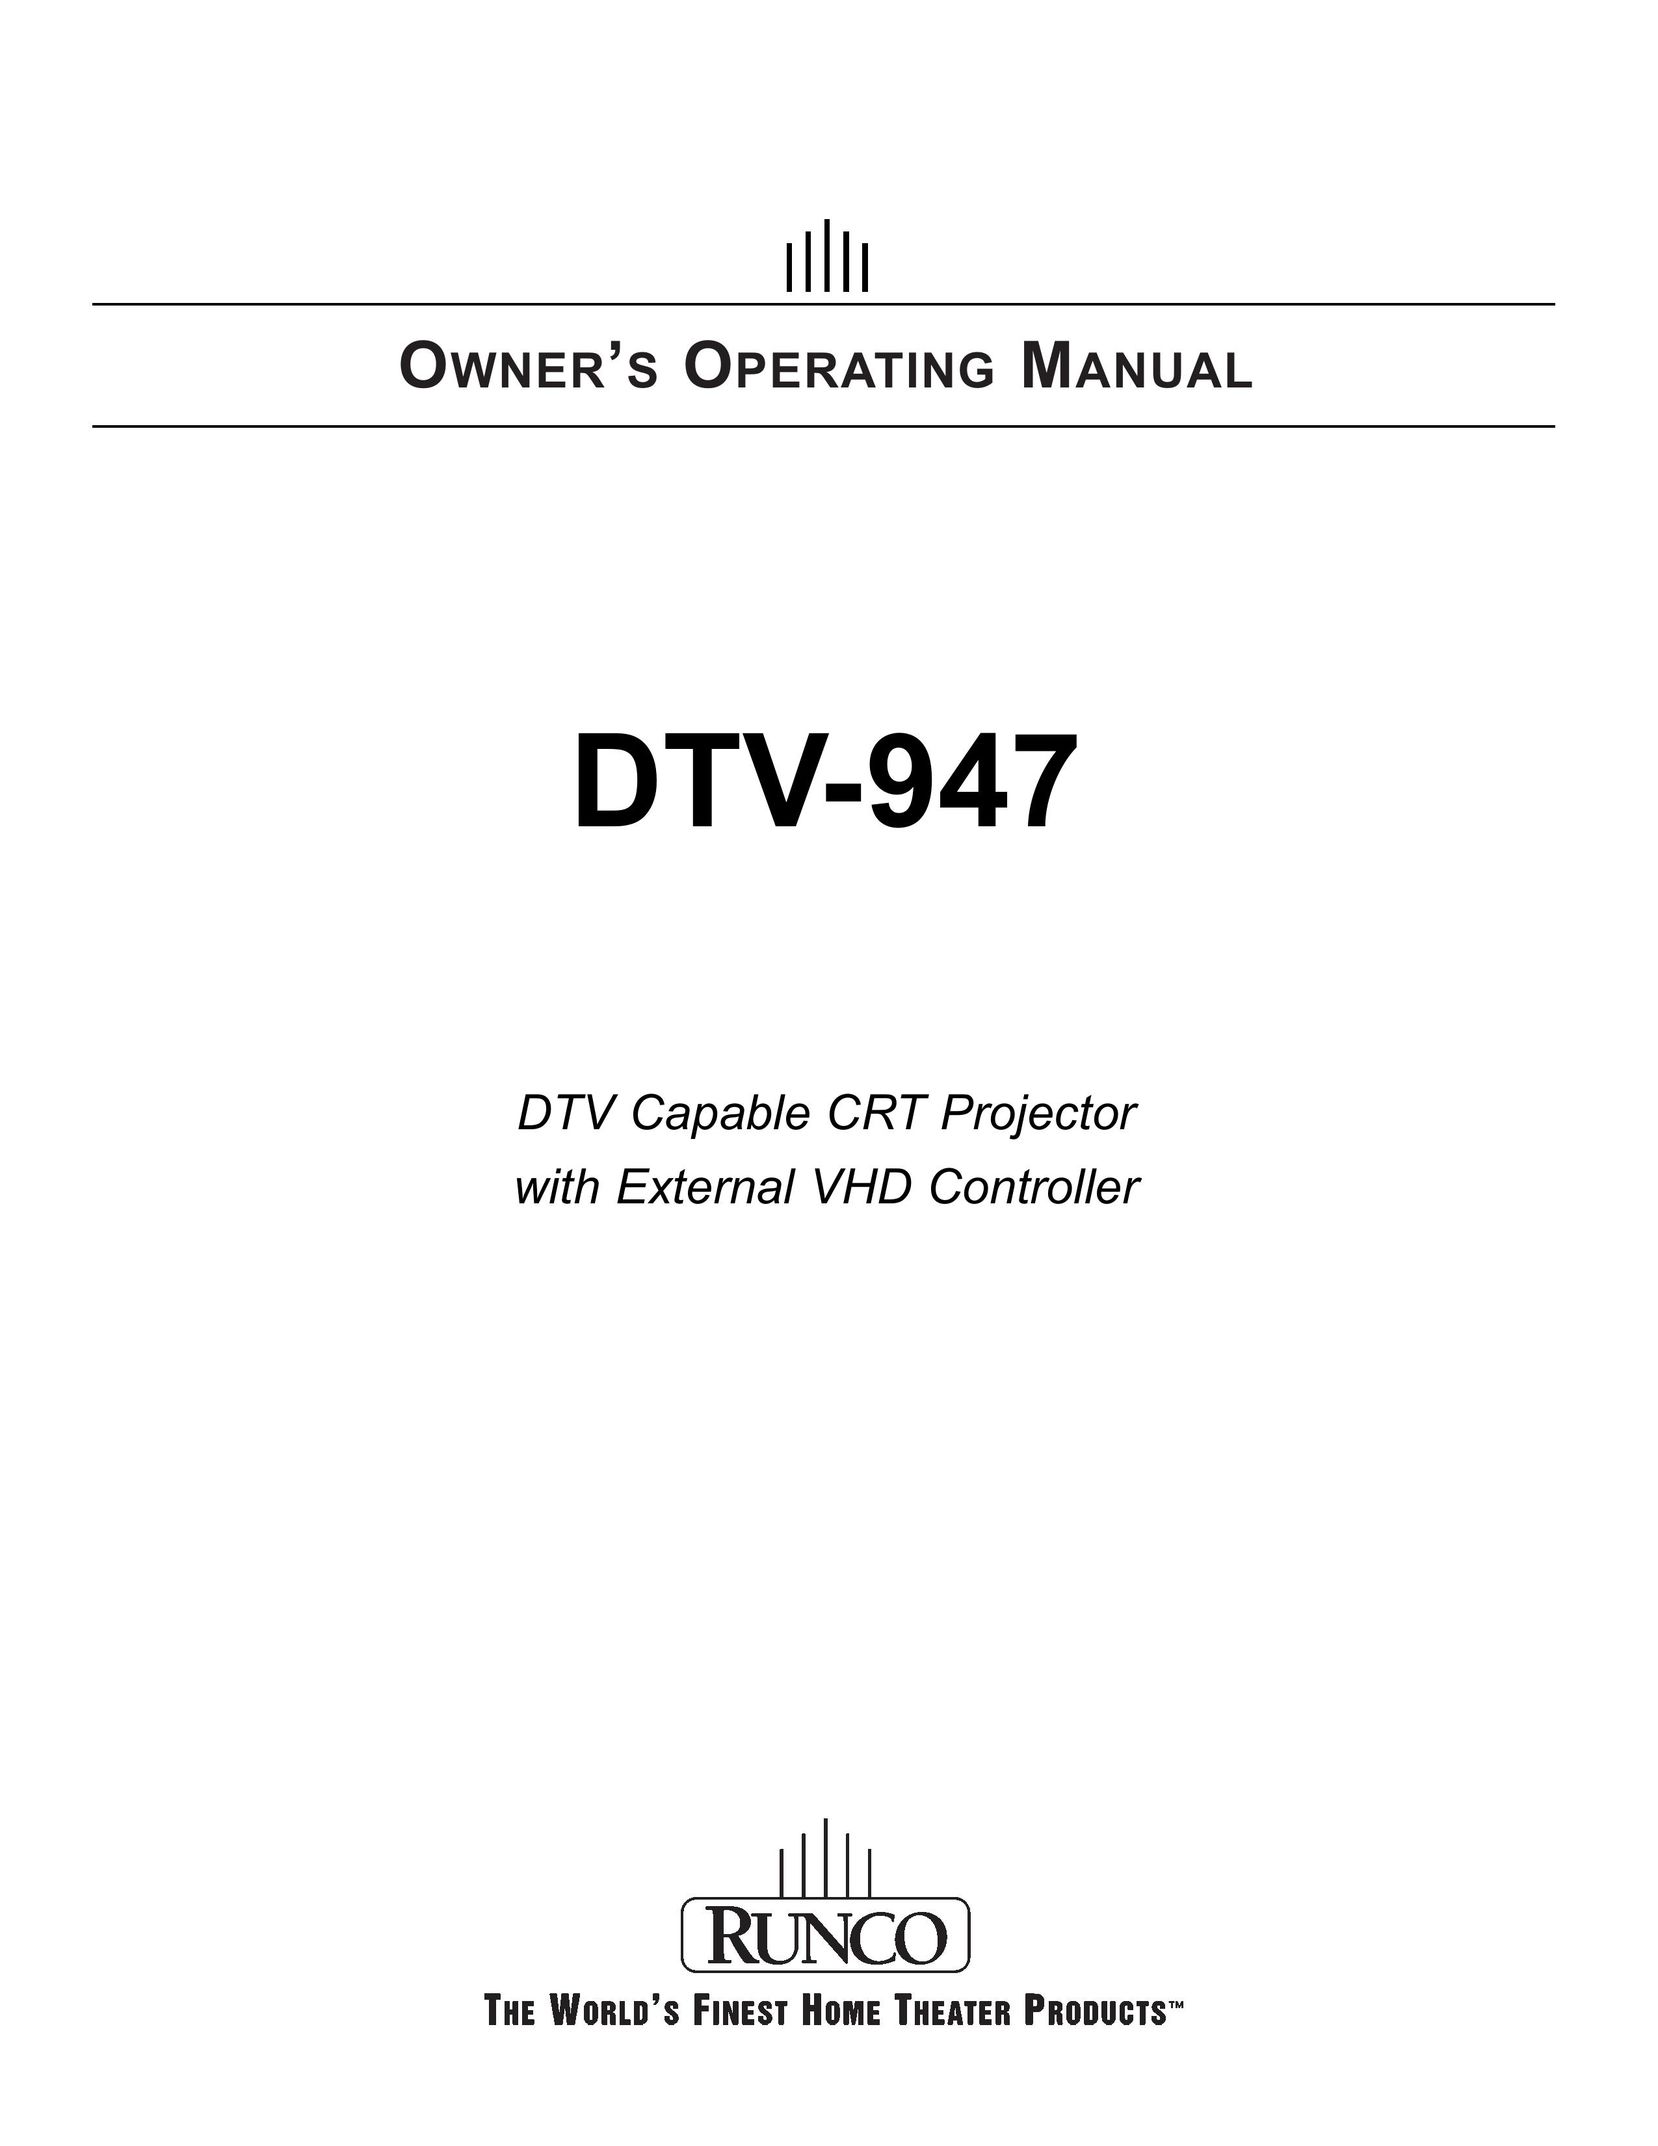 Runco DTV-947 Projector User Manual